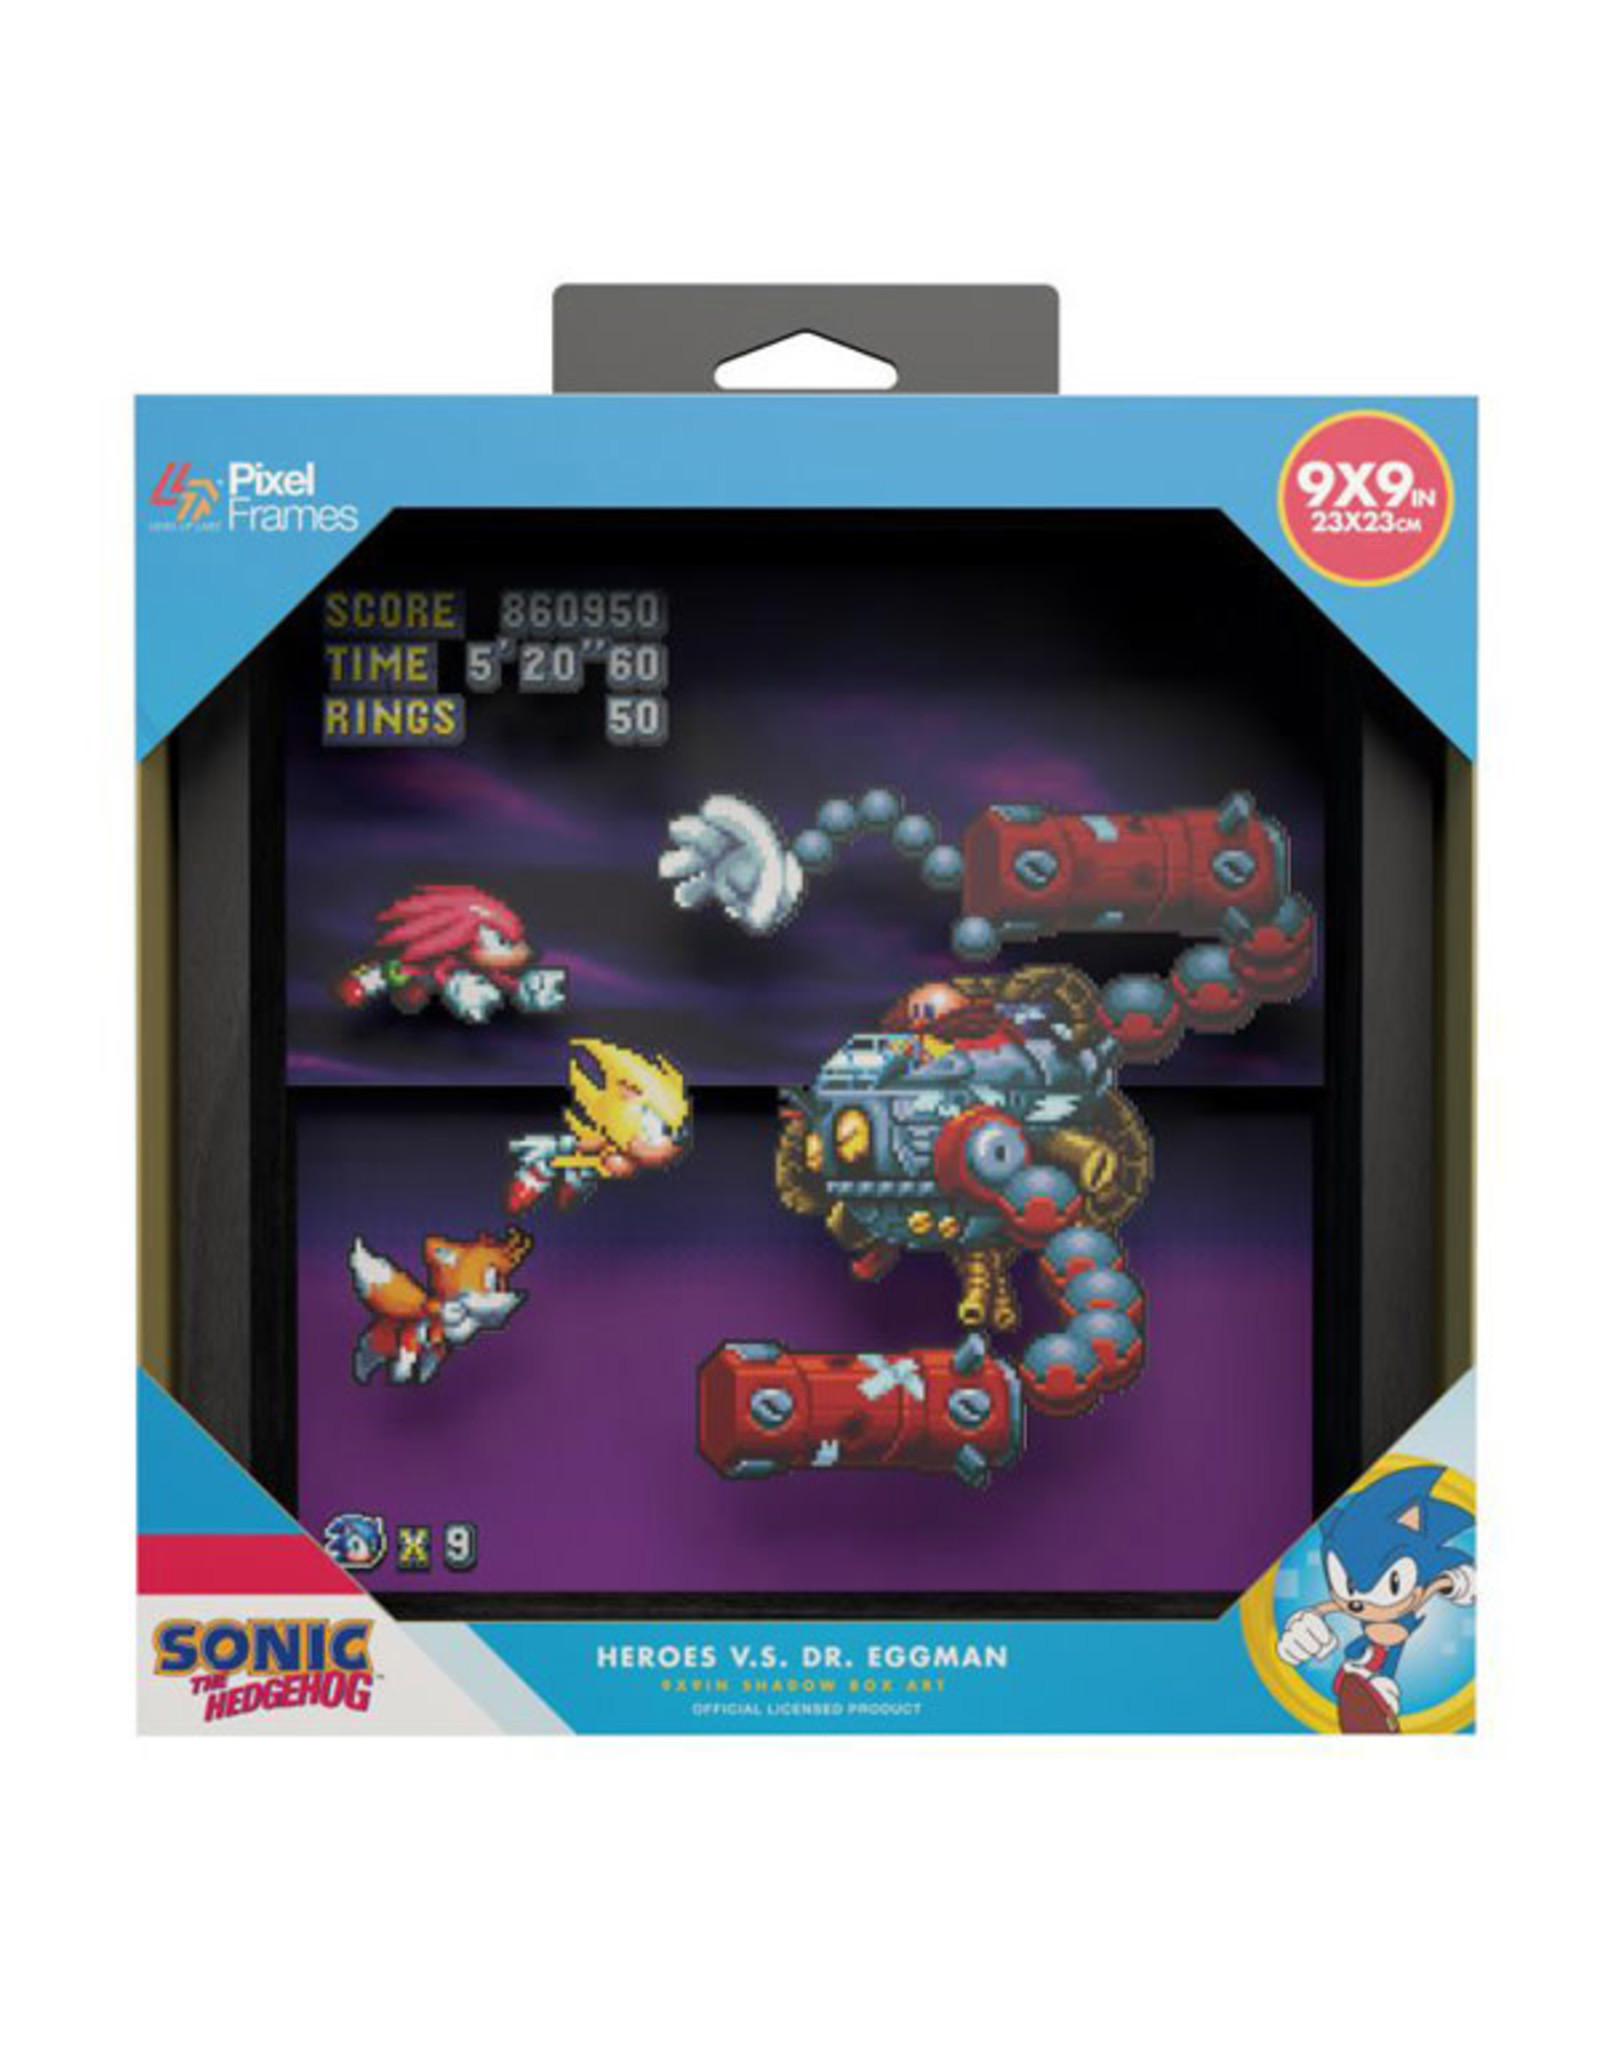 Pixelframe Pixelframe - Sonic Mania Heros - 9"x9"